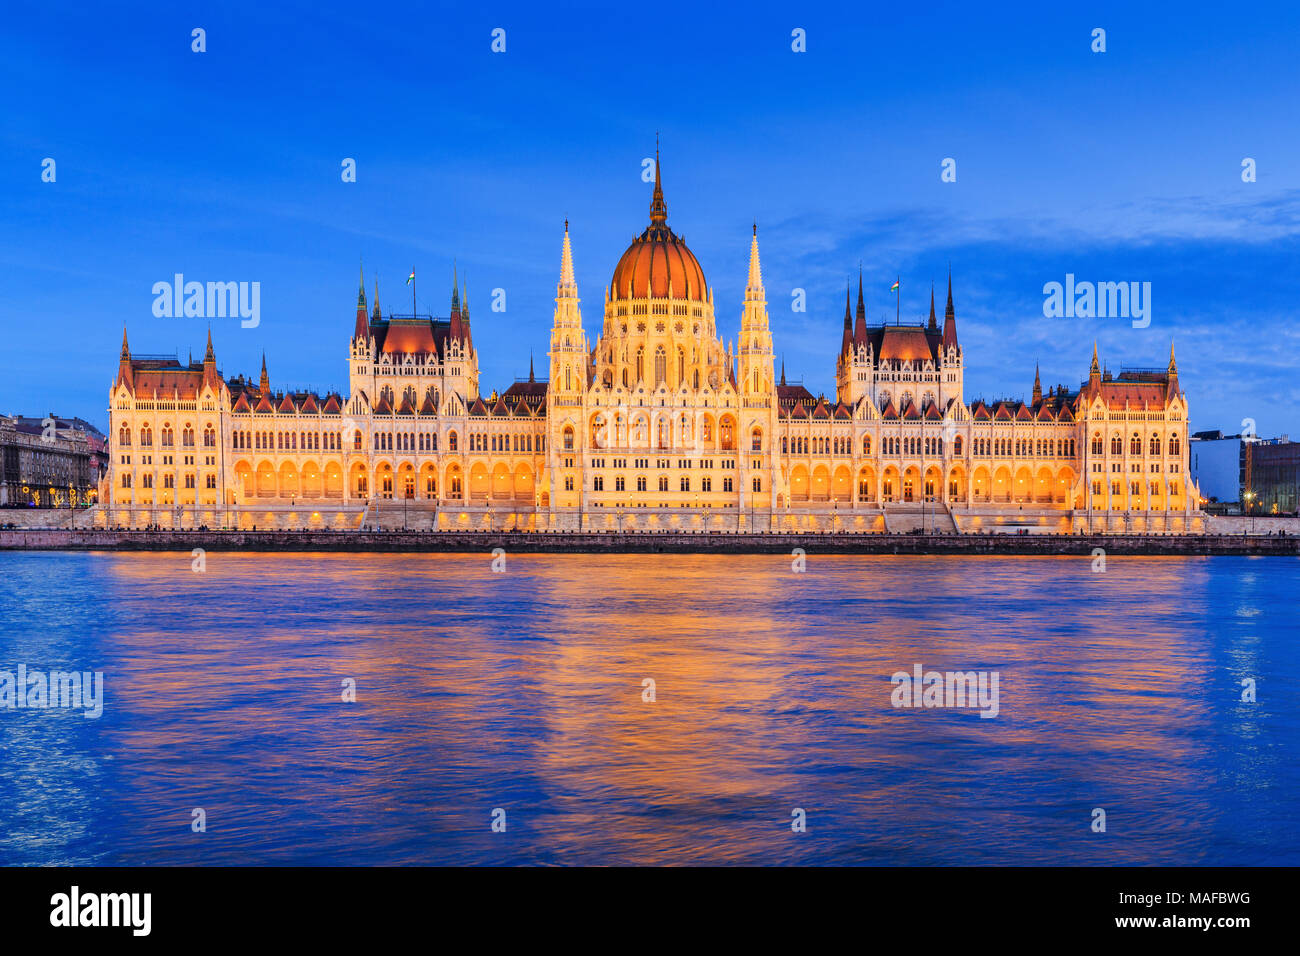 Budapest, Hungary. Parliament building at night. Stock Photo